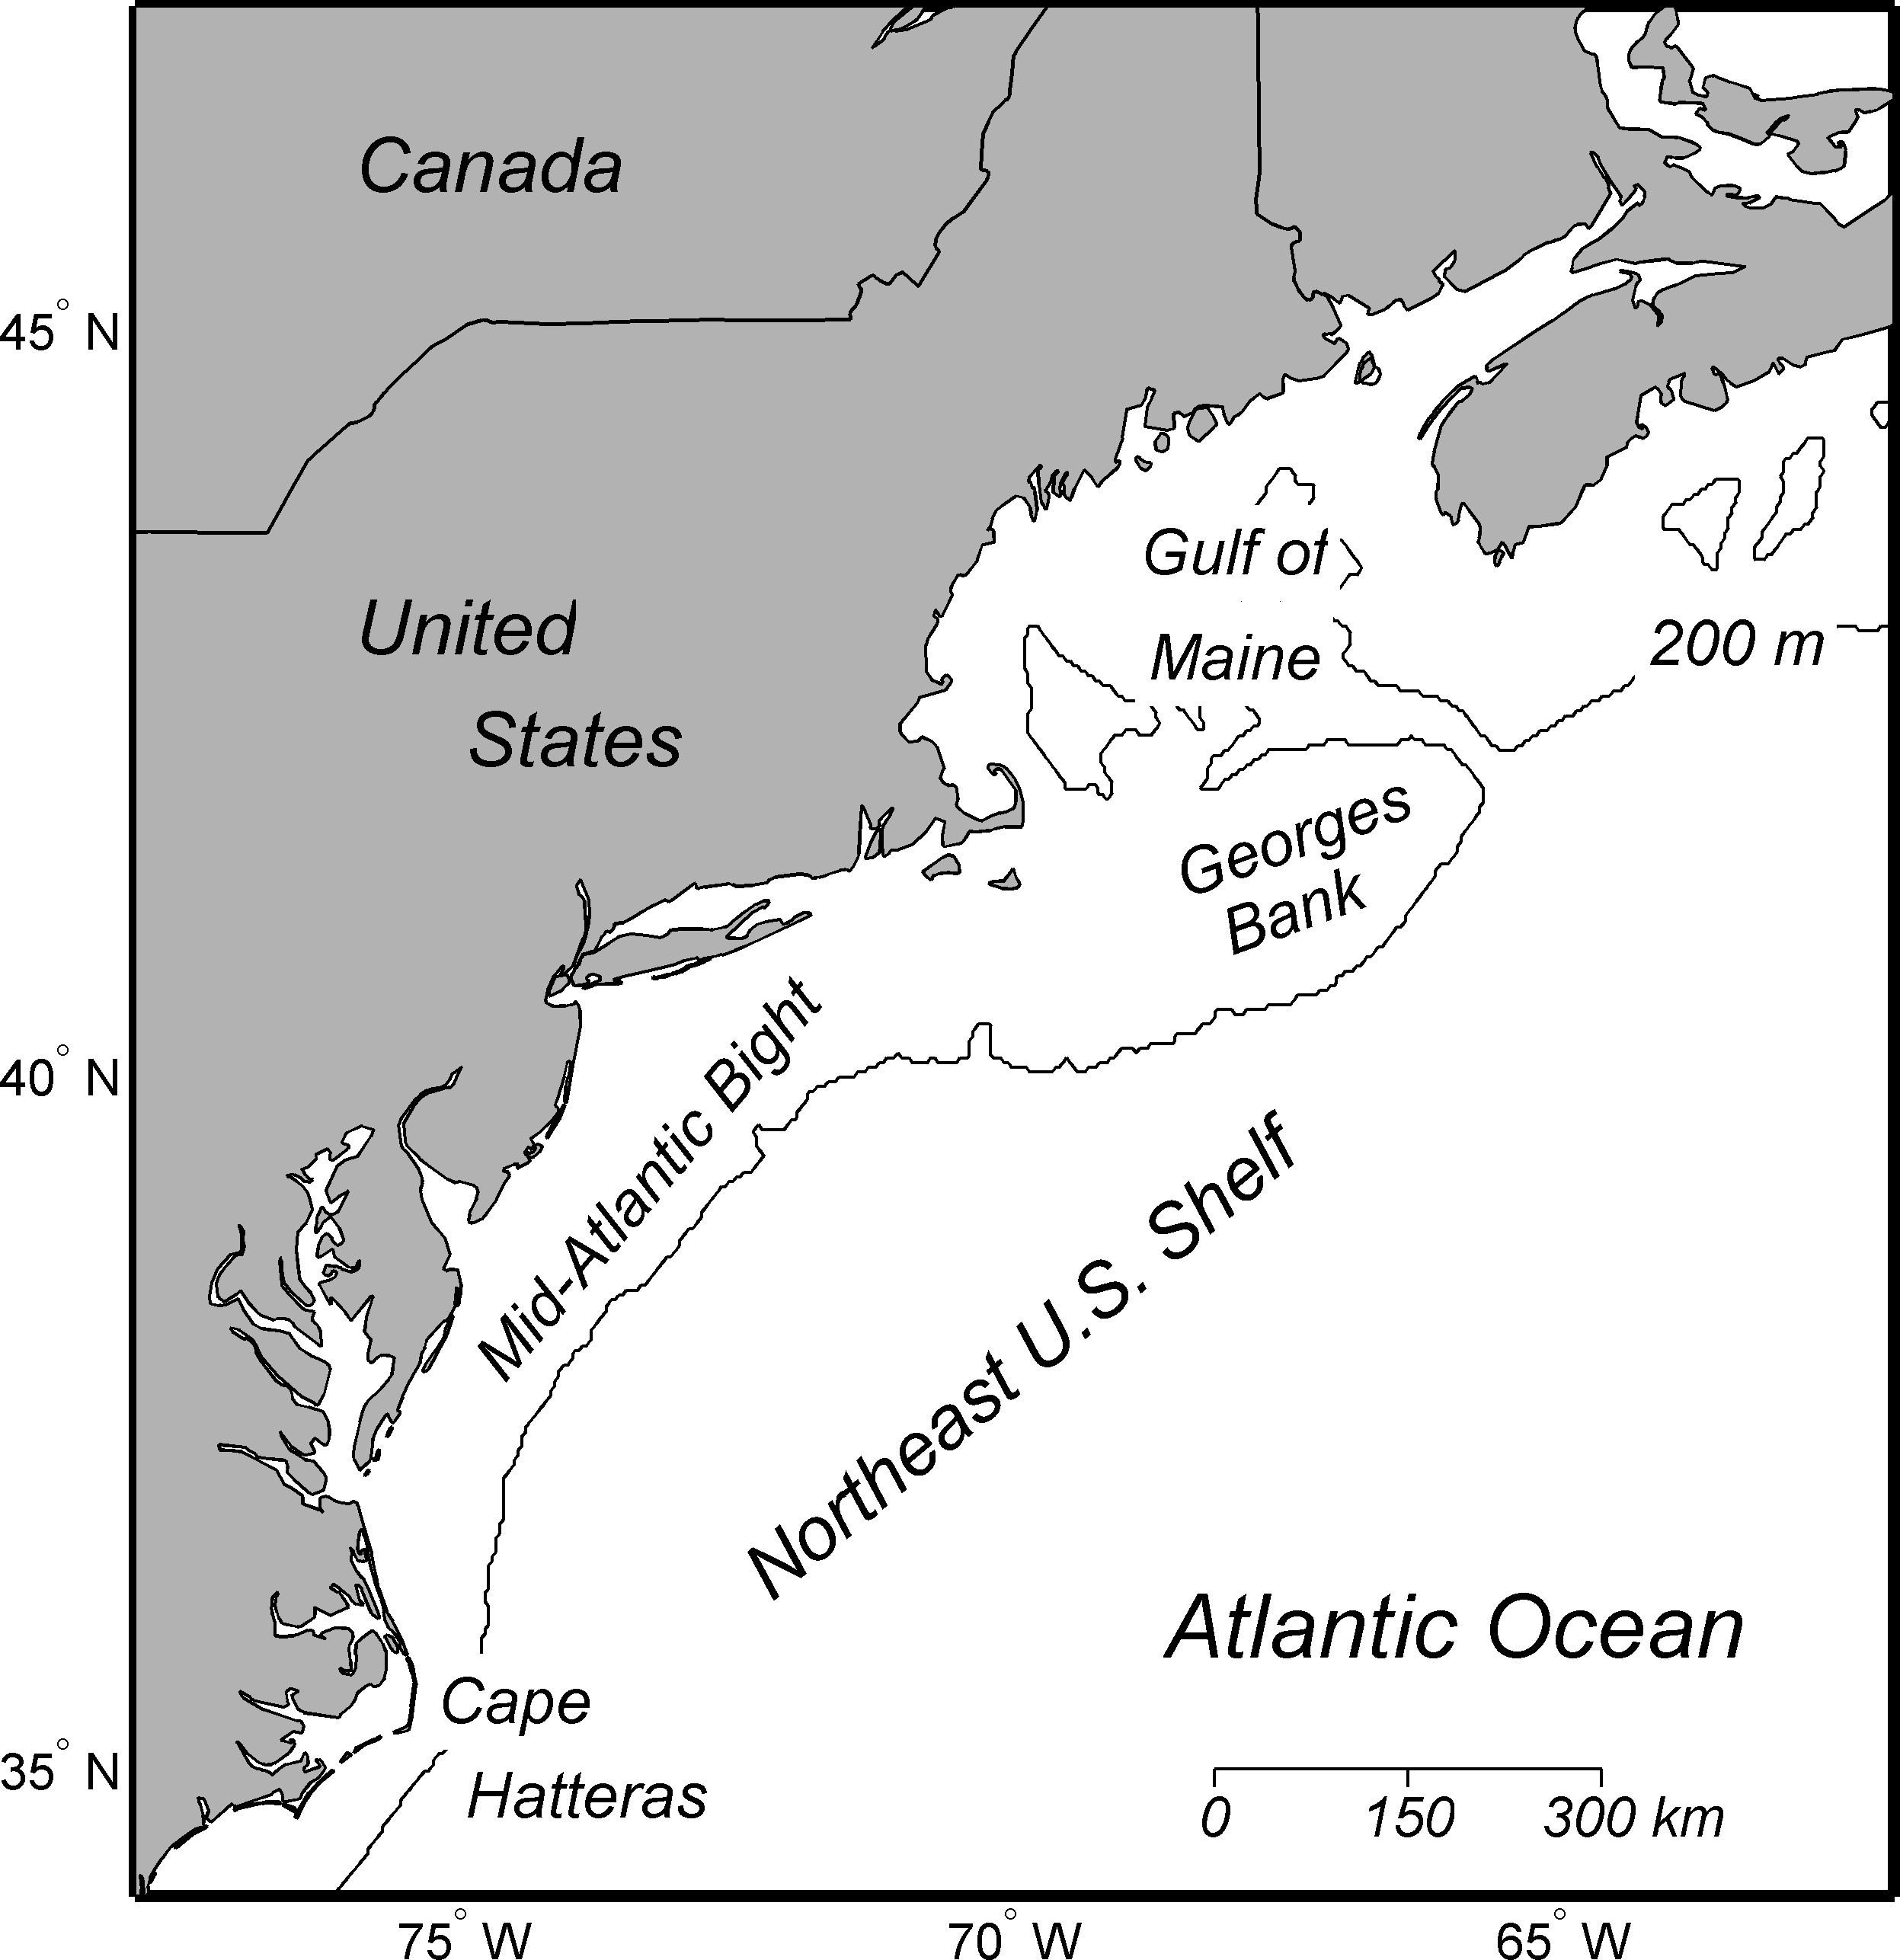 Map of Northeast U.S. Continental Shelf Large Marine Ecosystem from J. Hare et al. (2016).